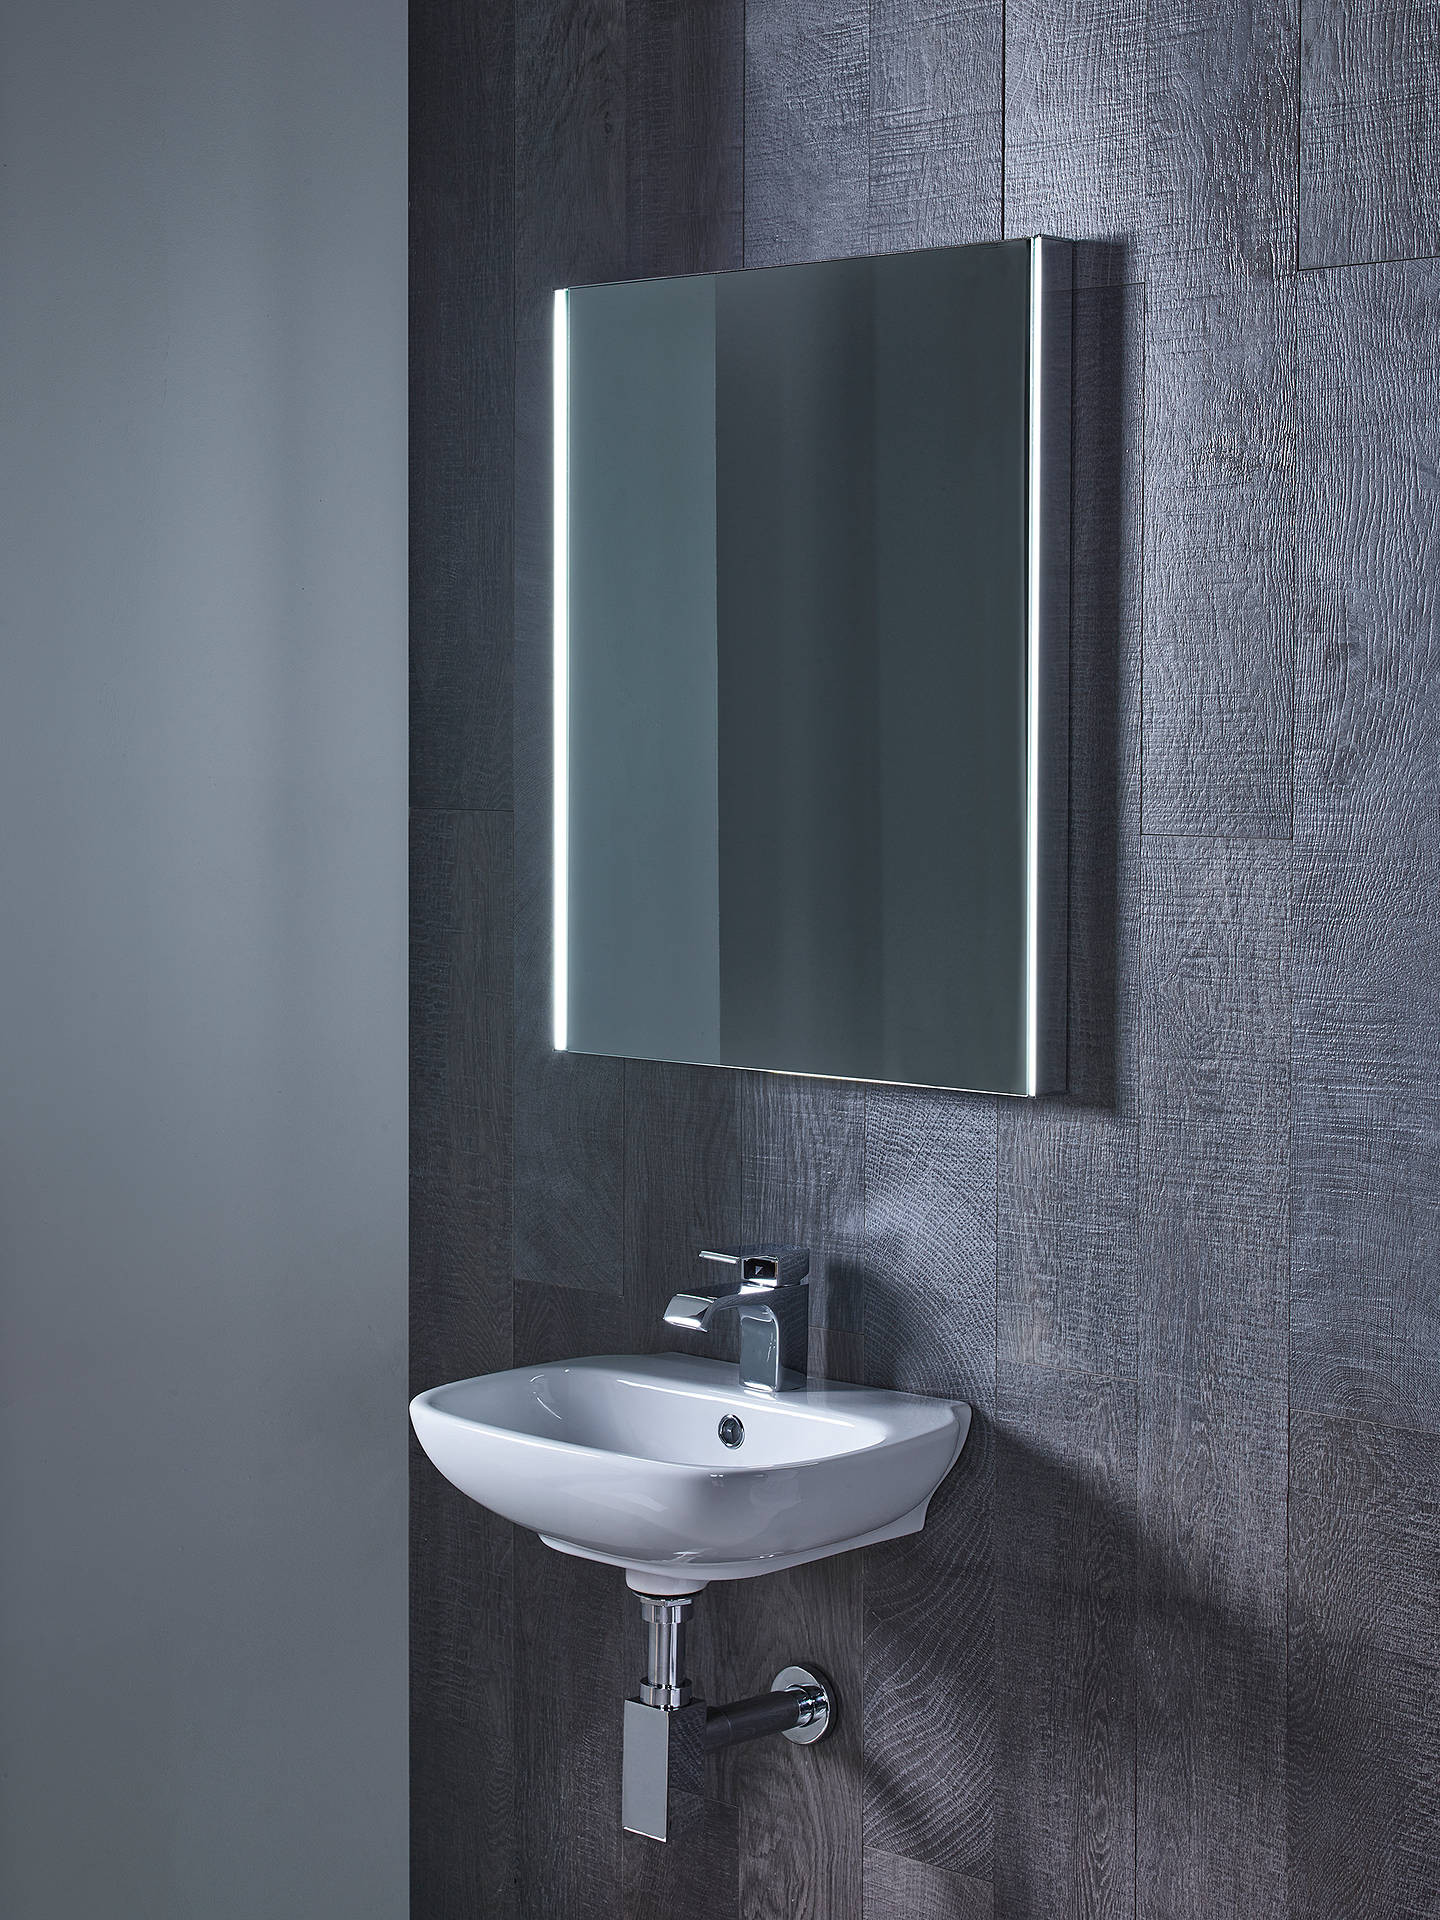 Bathroom Mirrors Online
 Roper Rhodes Precise Illuminated Bathroom Mirror at John